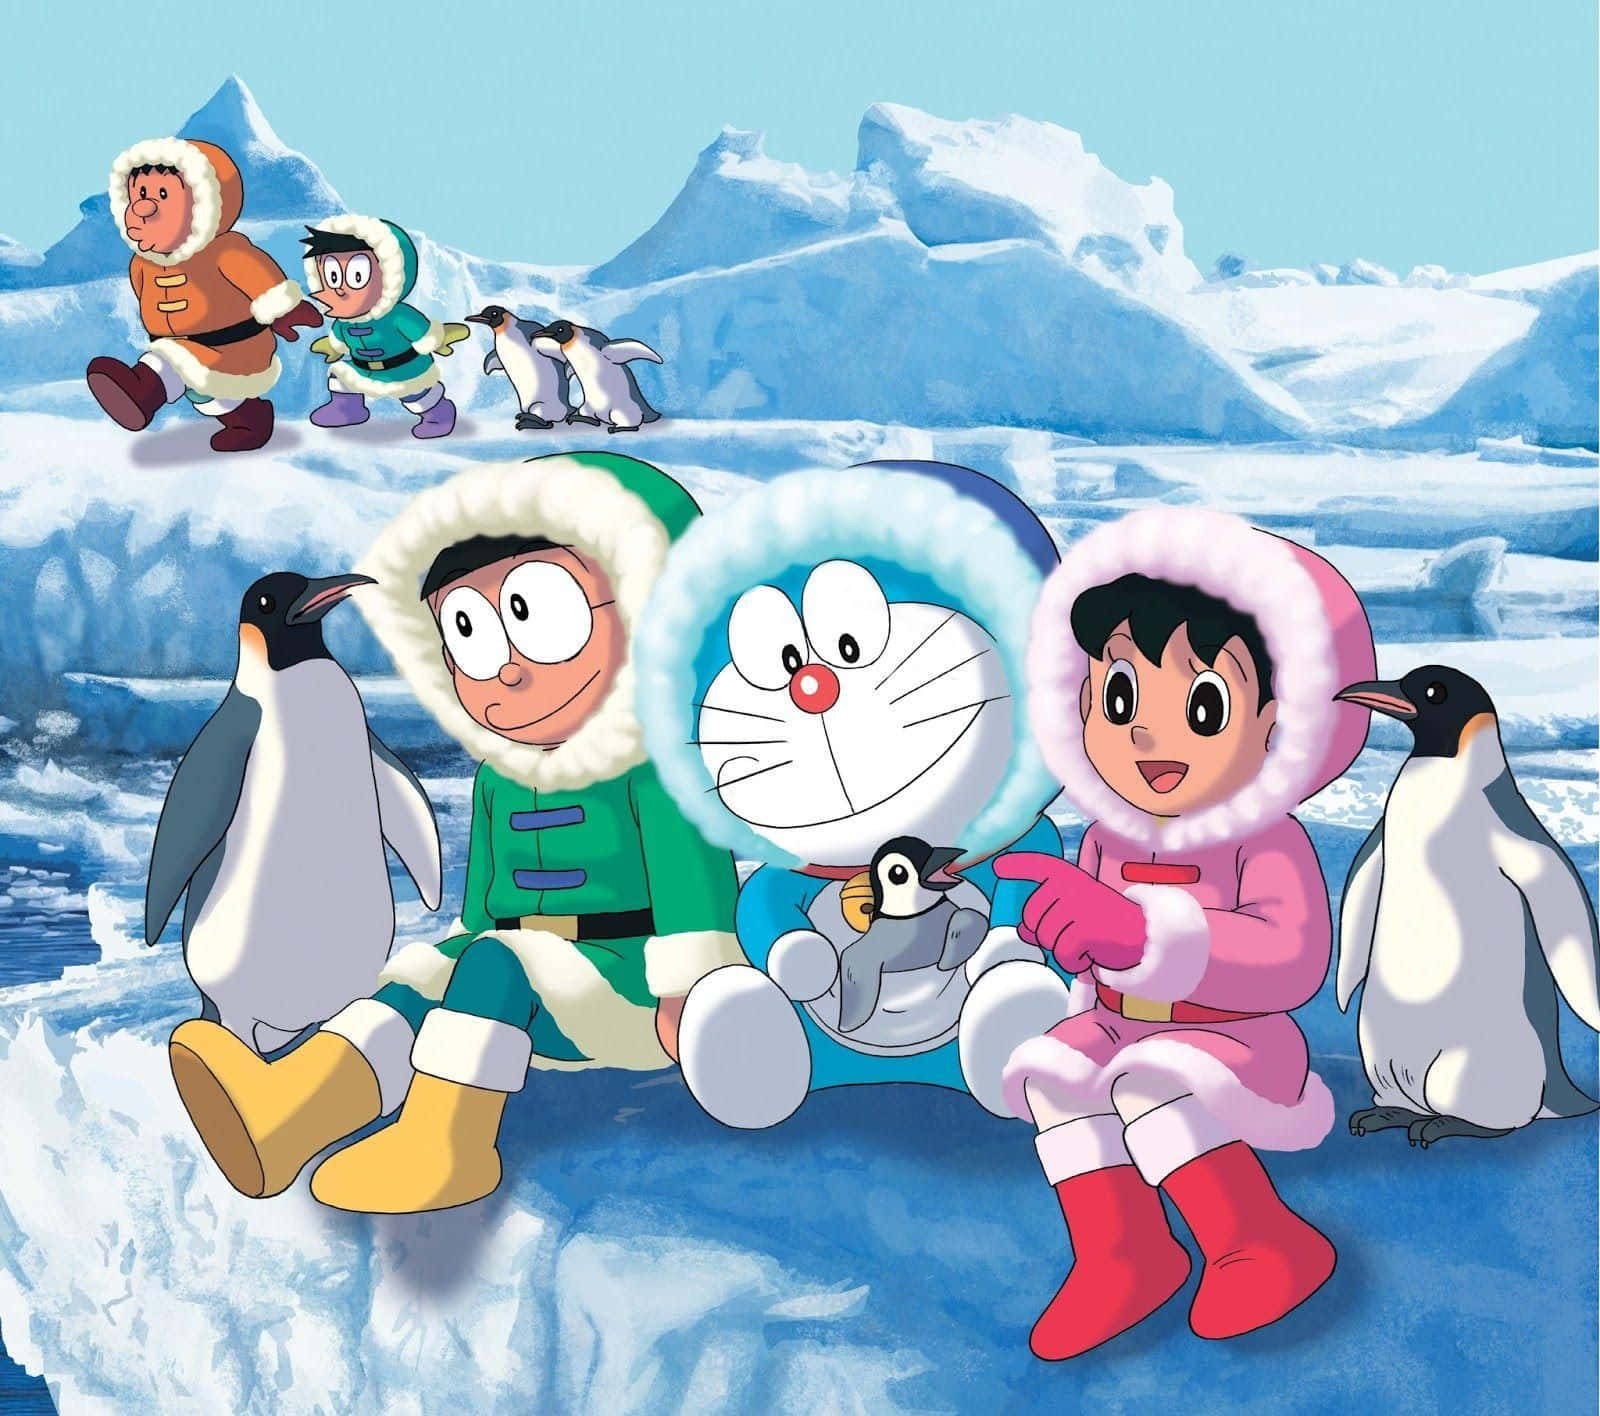 Doraemon – the beloved robotic cat from Japan